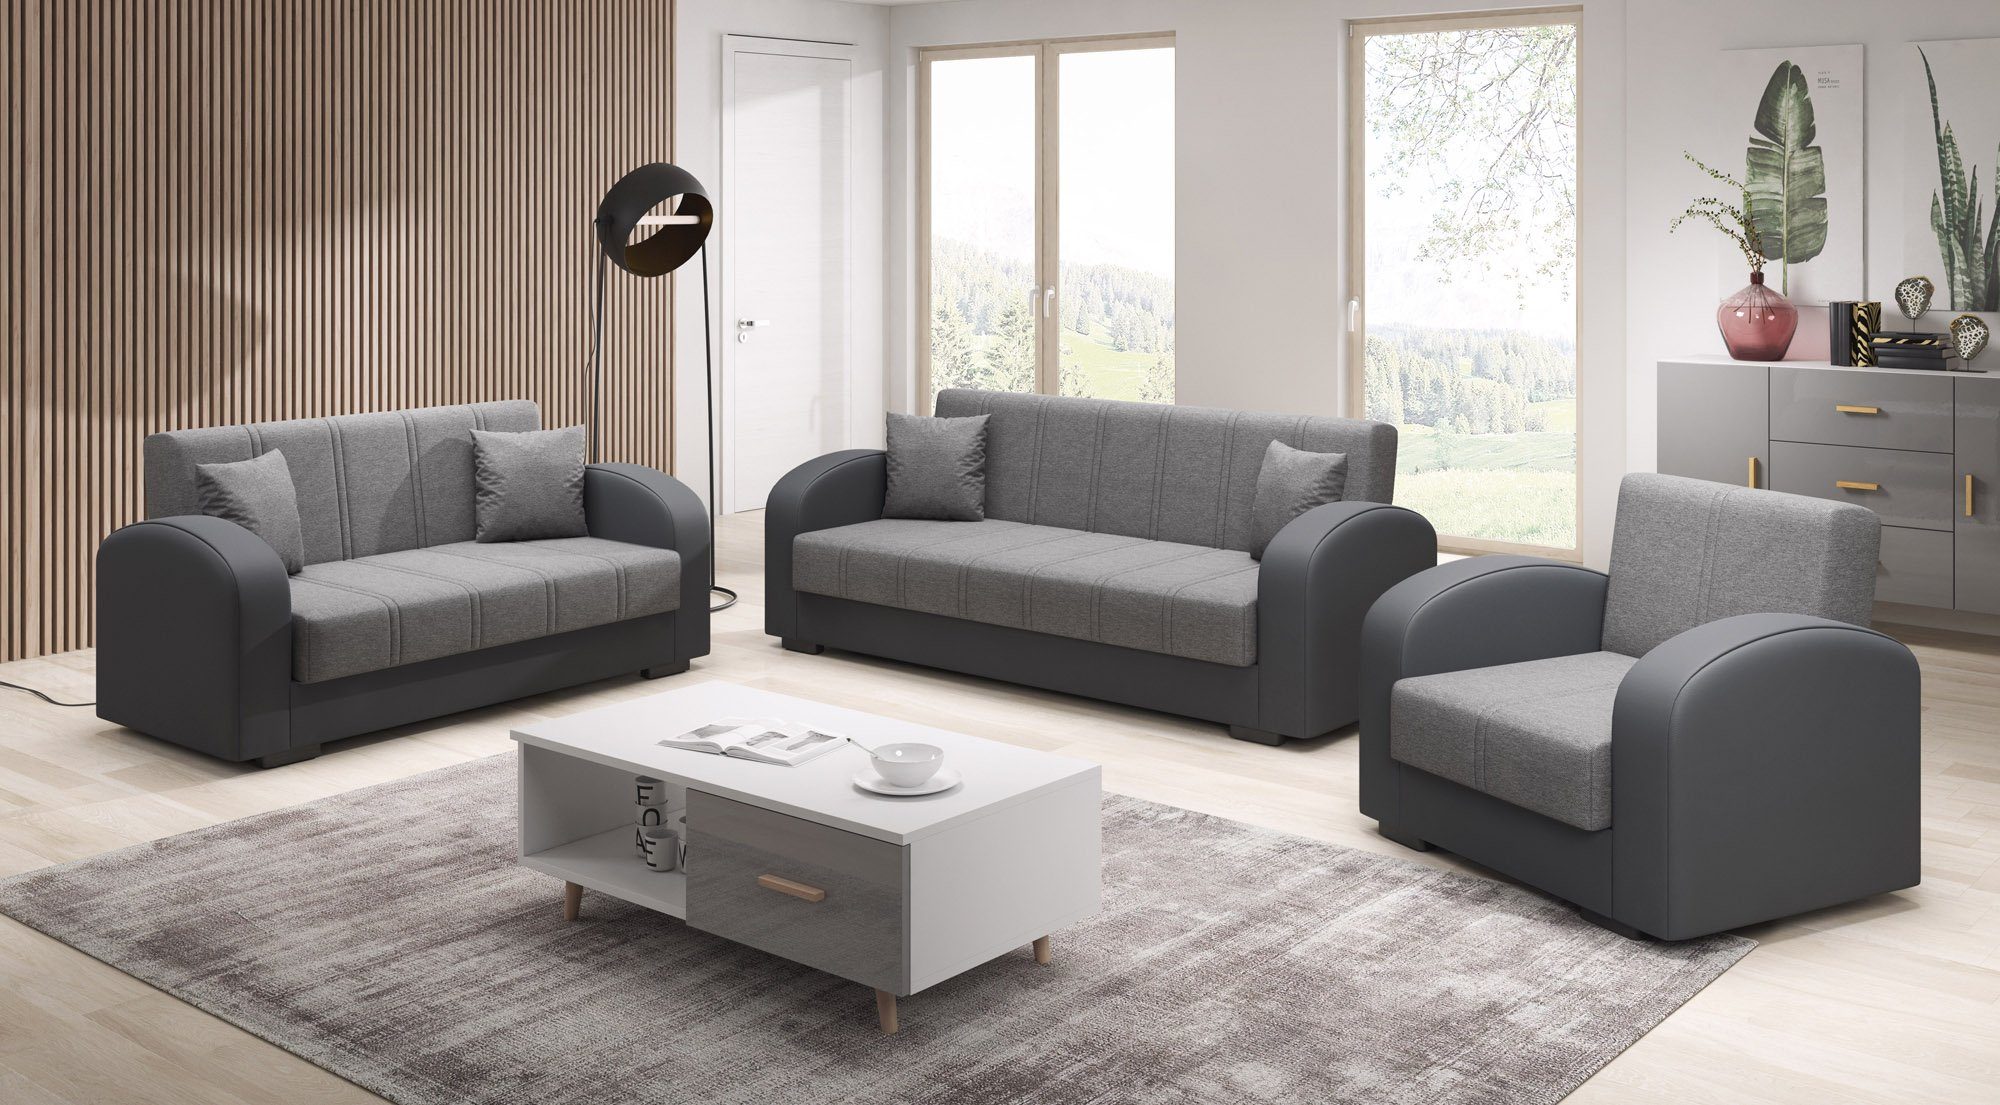 interbed Sofa 3-2-1 Sofa Set Vera, 3-2-1 Sofa online kaufen | OTTO